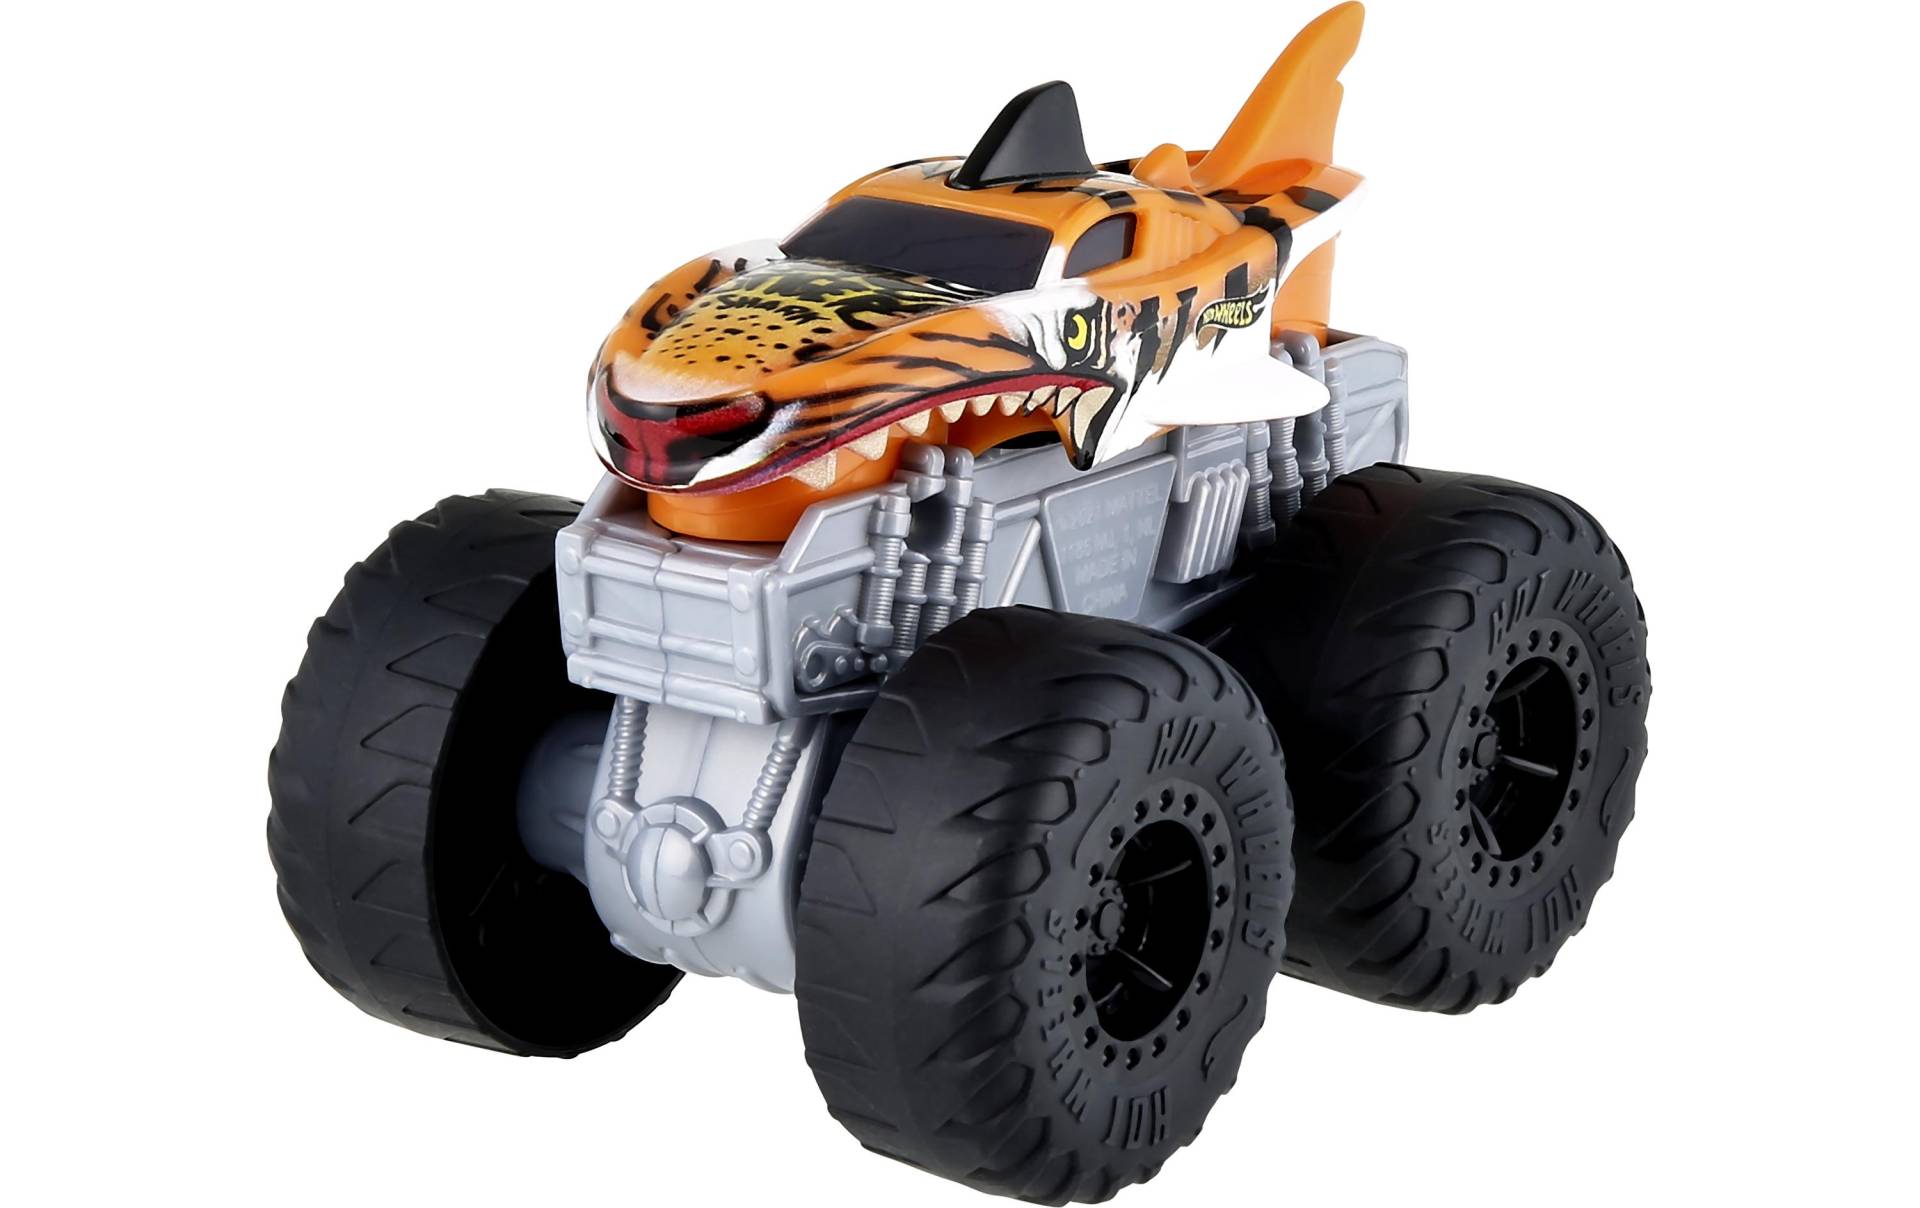 Hot Wheels Spielzeug-Monstertruck »Monster Trucks 0,0715277777777778 Tiger Shark« von Hot Wheels